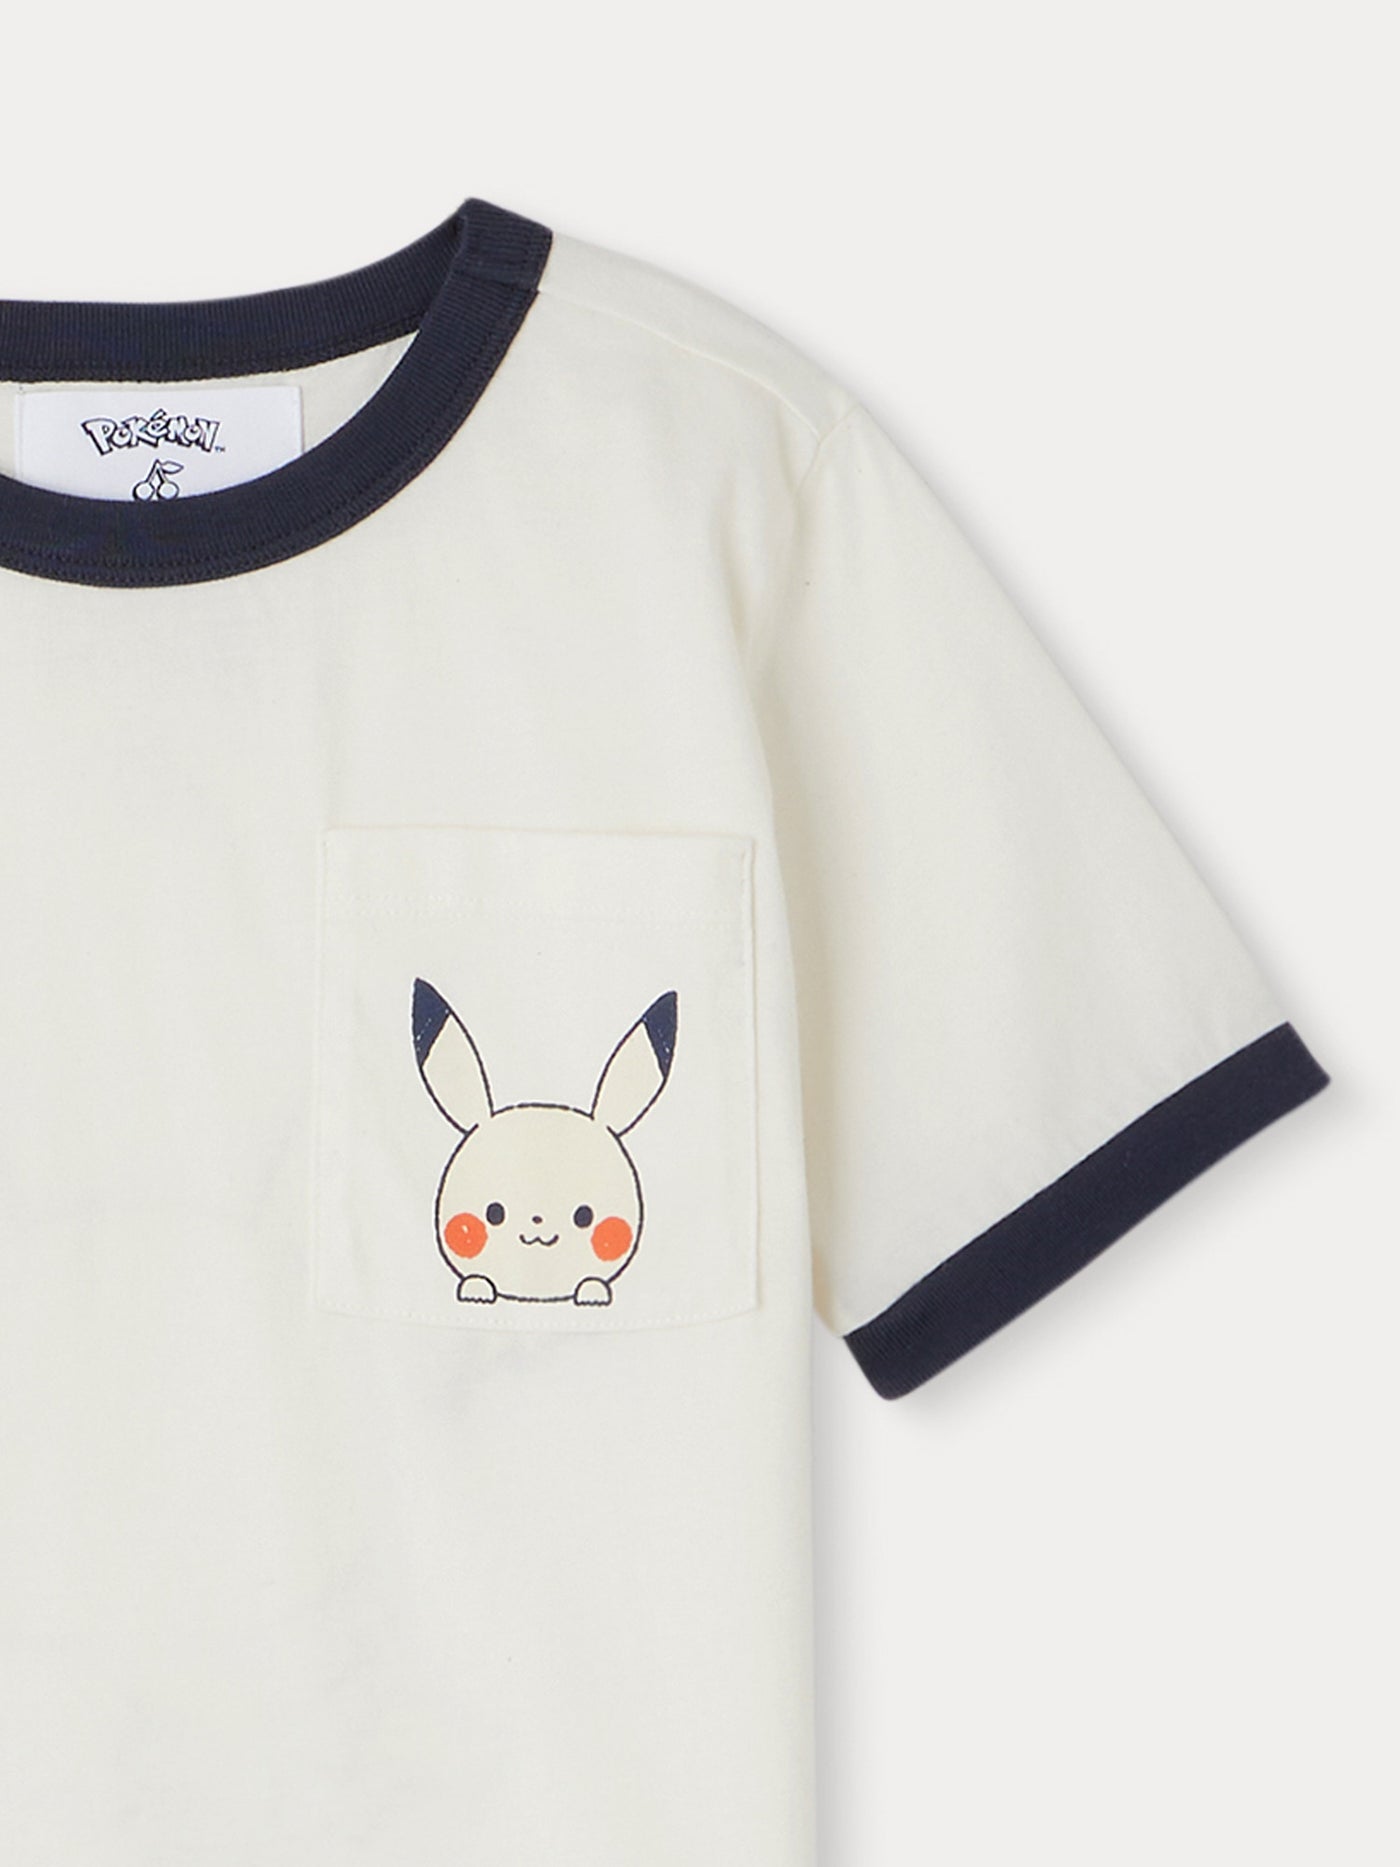 Bonpoint x Pokémon Fortunato T-Shirt white milk